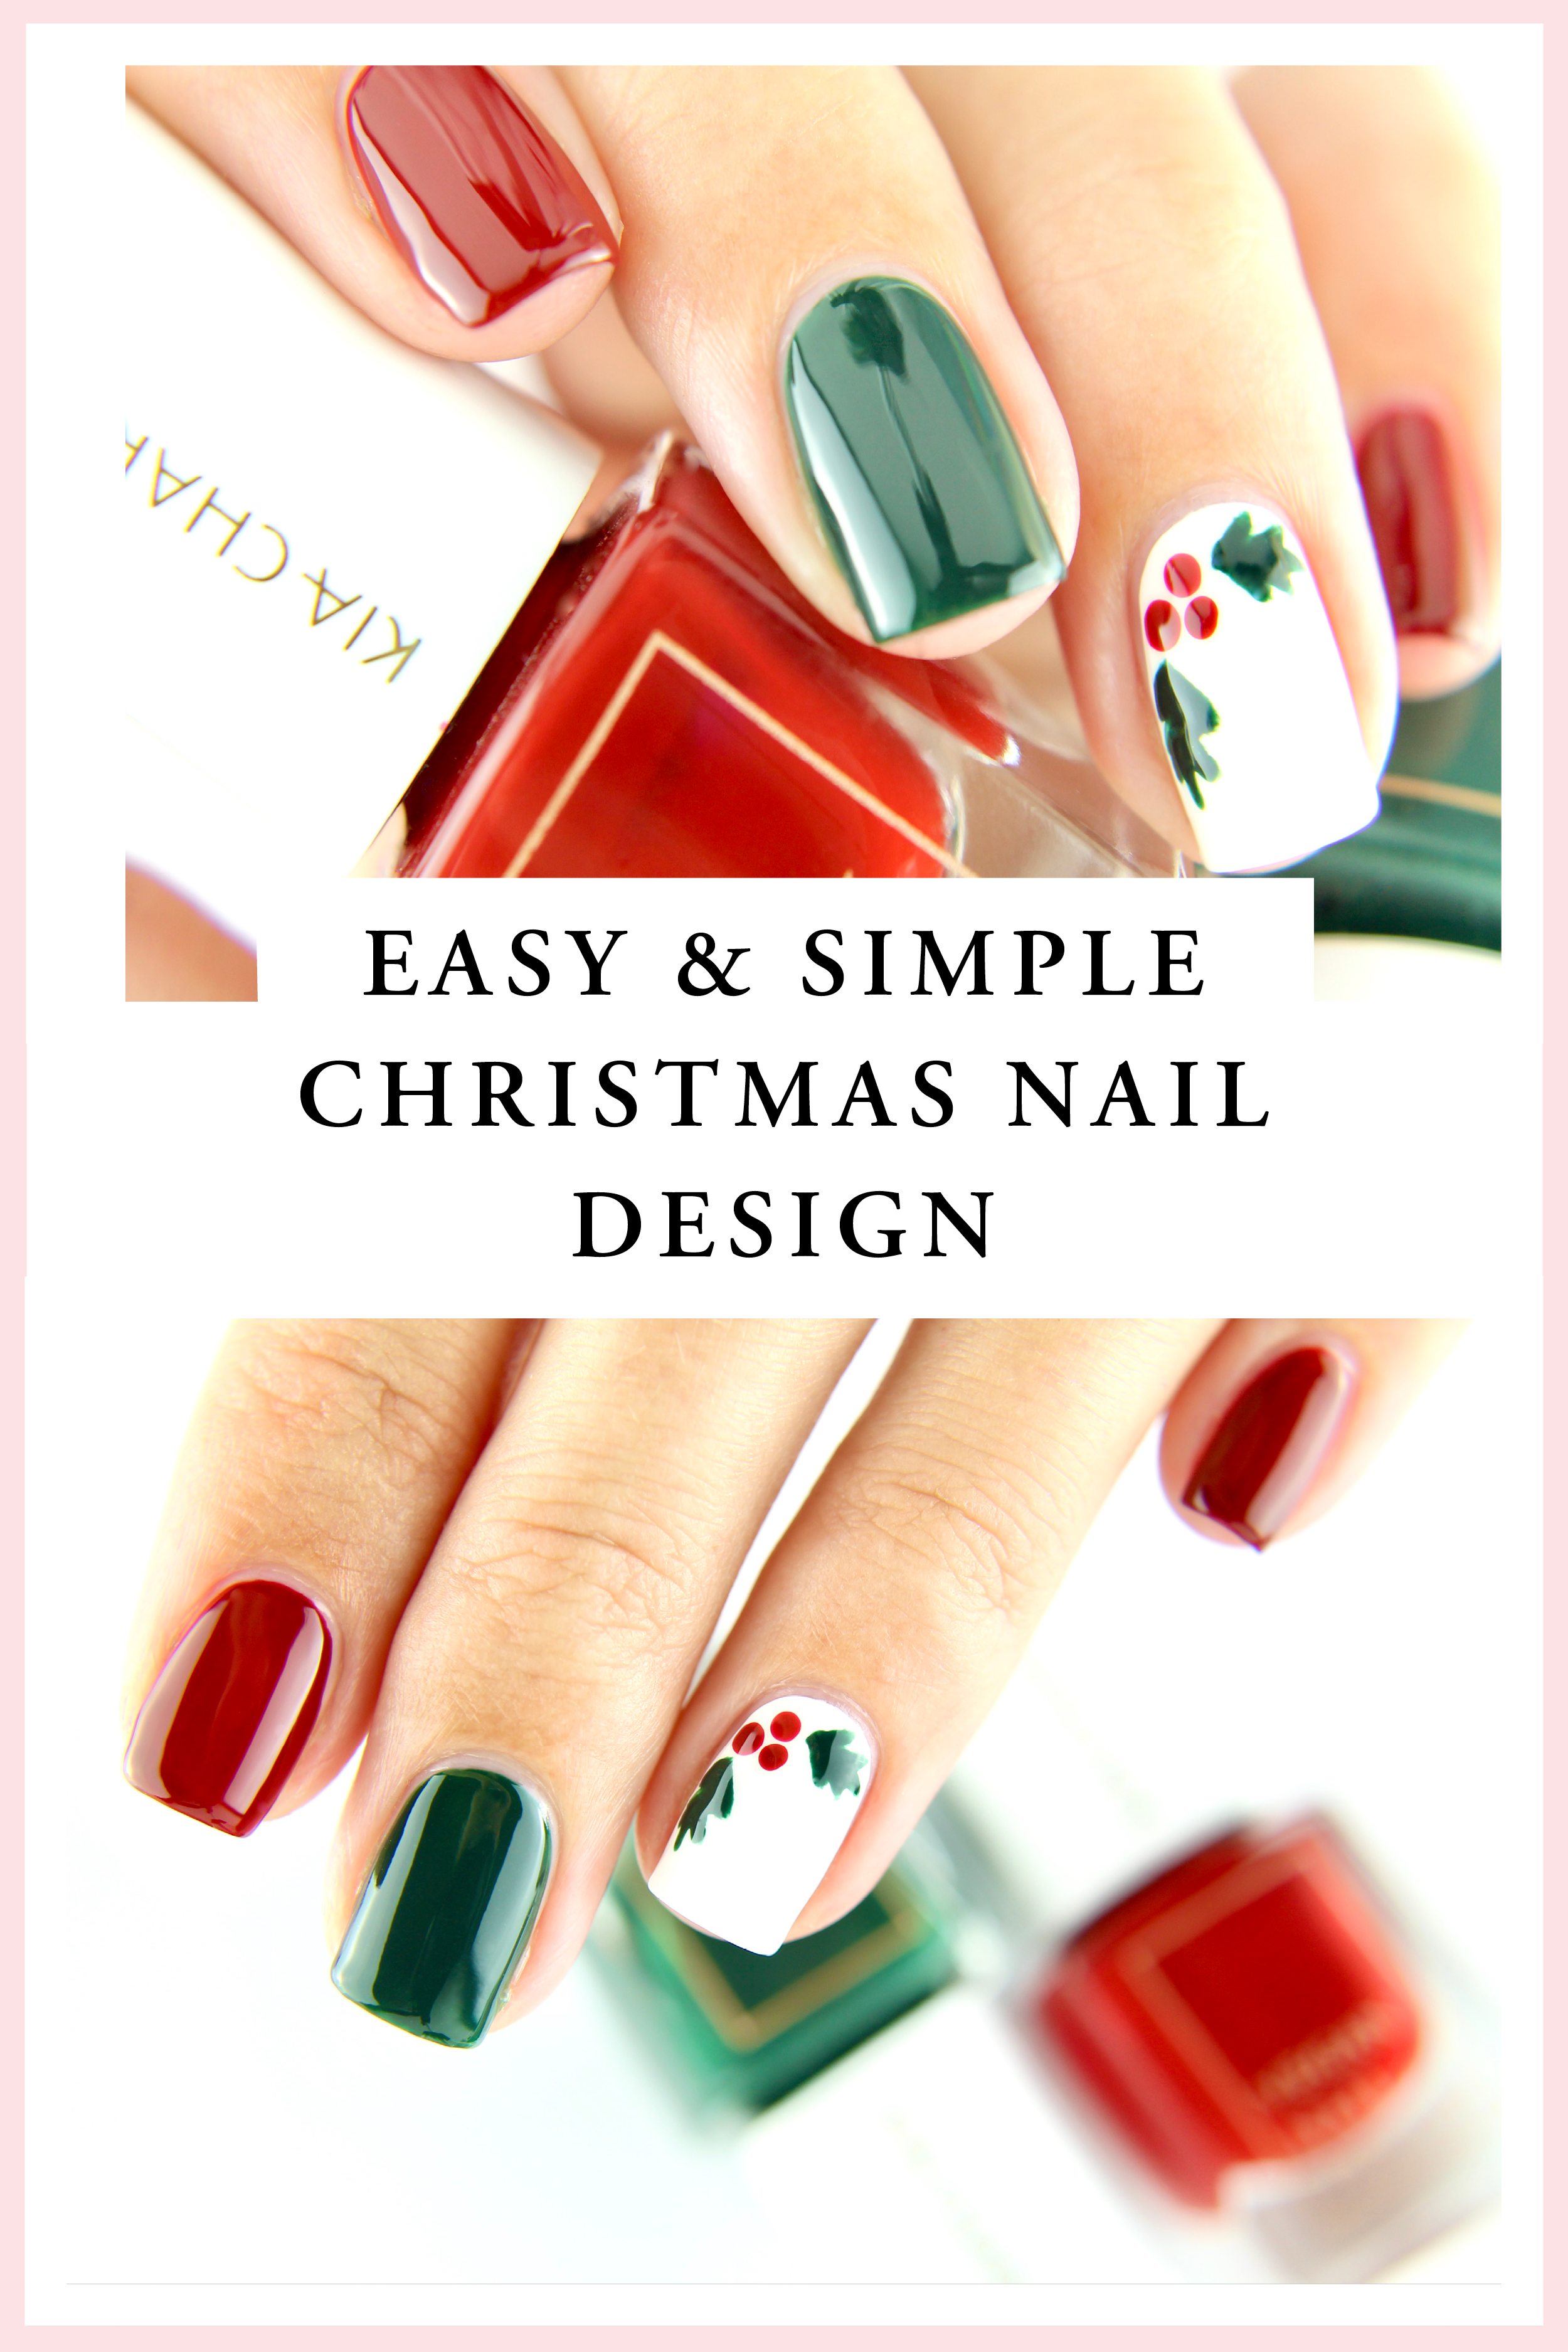 EASY & SIMPLE CHRISTMAS NAIL ART DESIGN I Kia-Charlotta -   14 xmas nails simple ideas